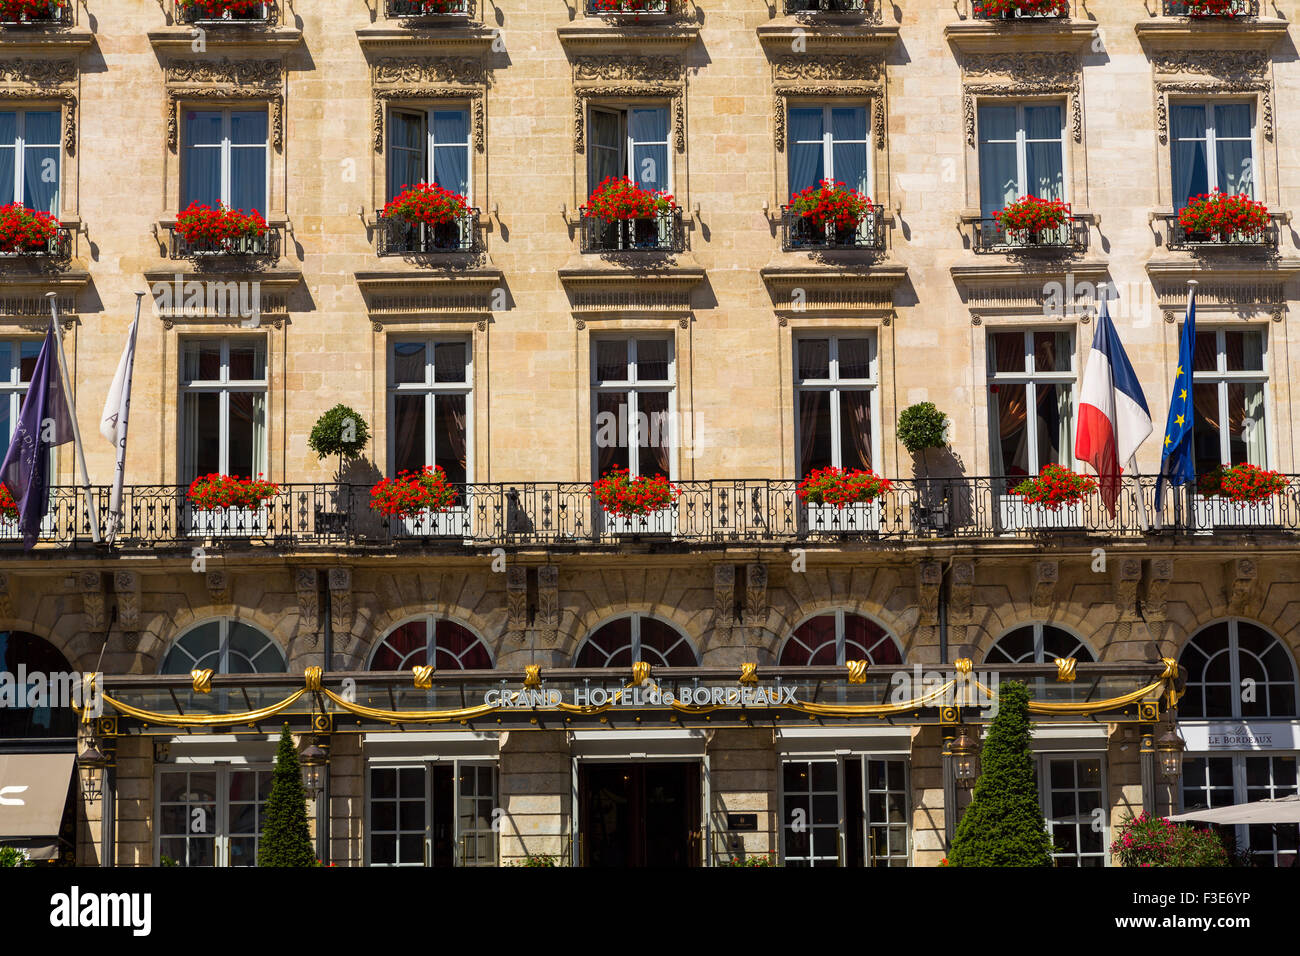 Grand Hotel Bordeaux Place De La Comedie quadratische Gironde Aquitaine Frankreich Europa Stockfoto